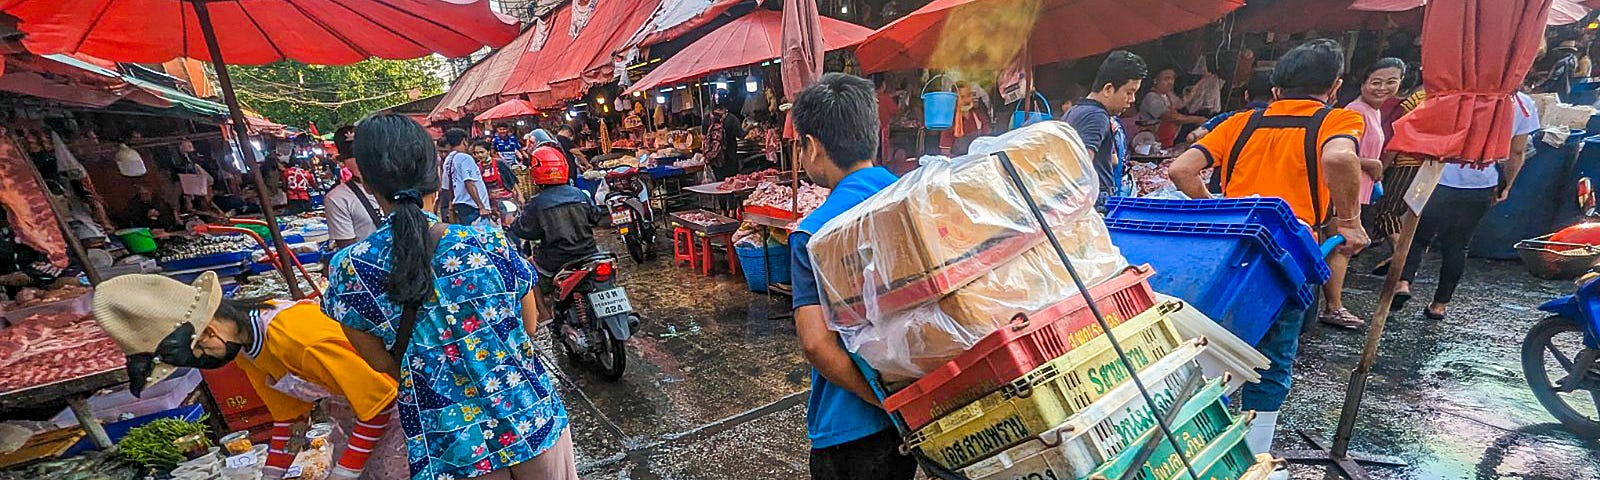 Man pulling pile of plastic bins behind of him as he walks through crowded market.